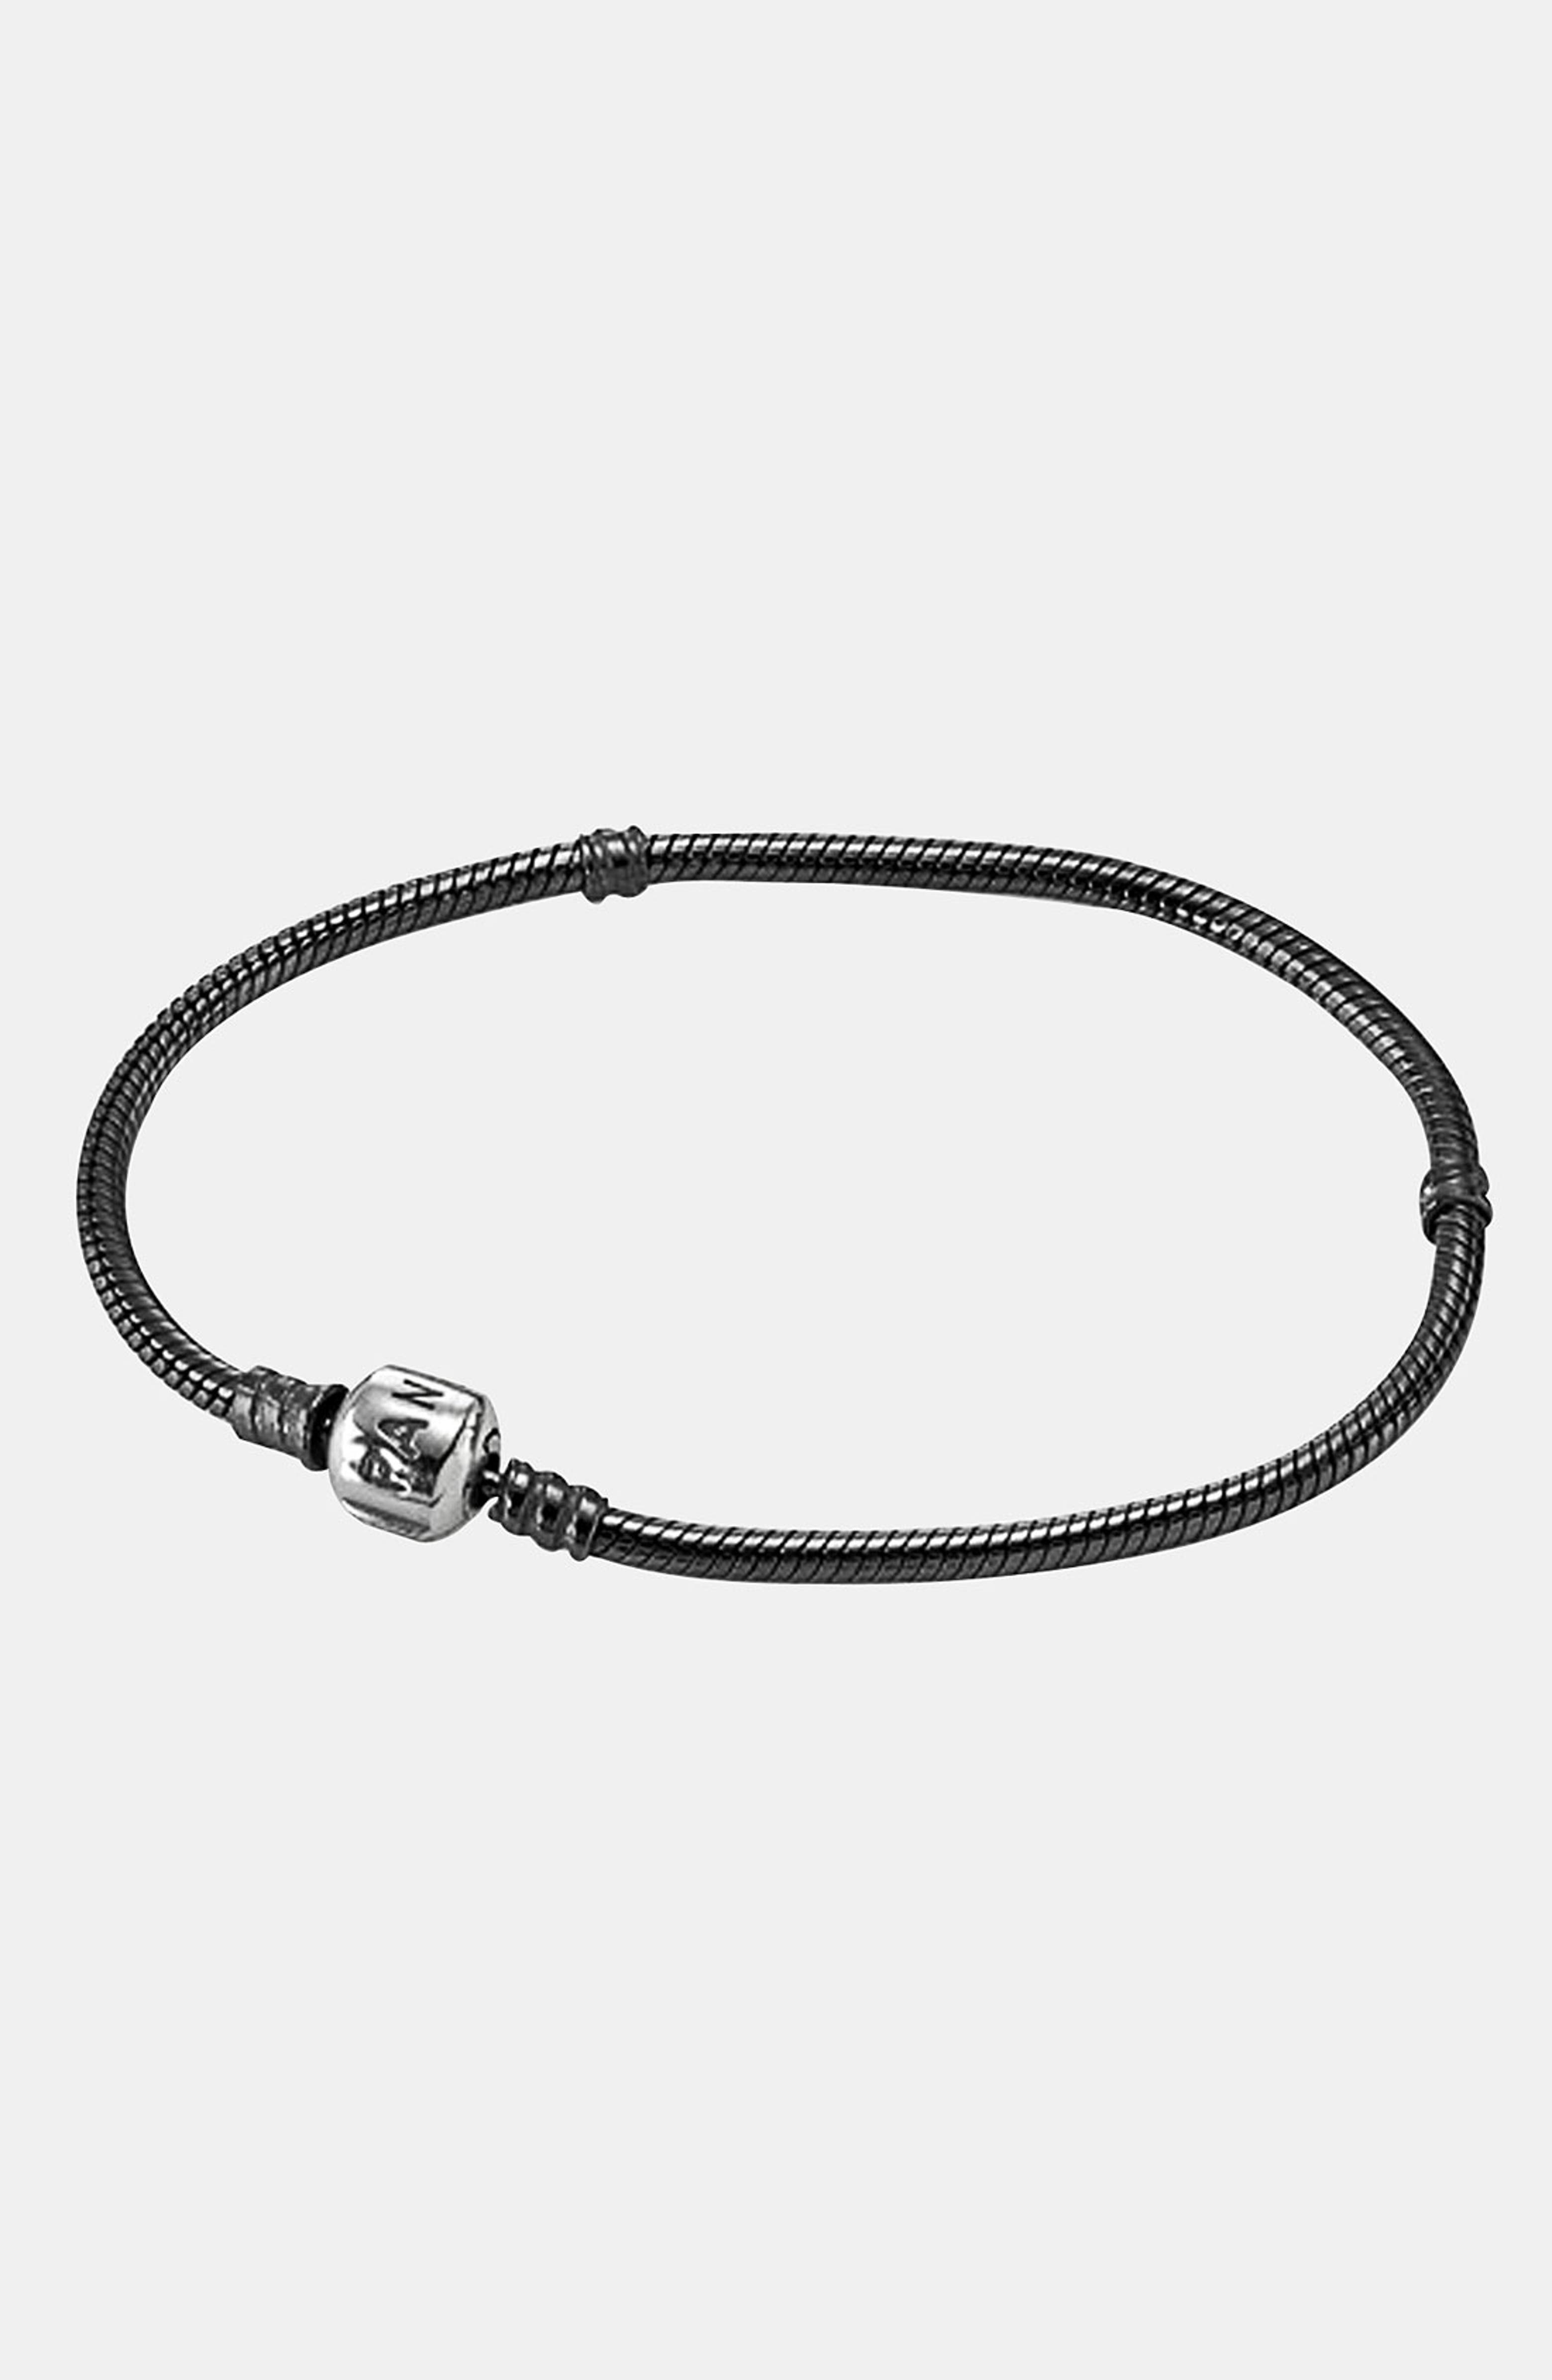 Pandora Oxidized Sterling Silver Charm Bracelet Nordstrom